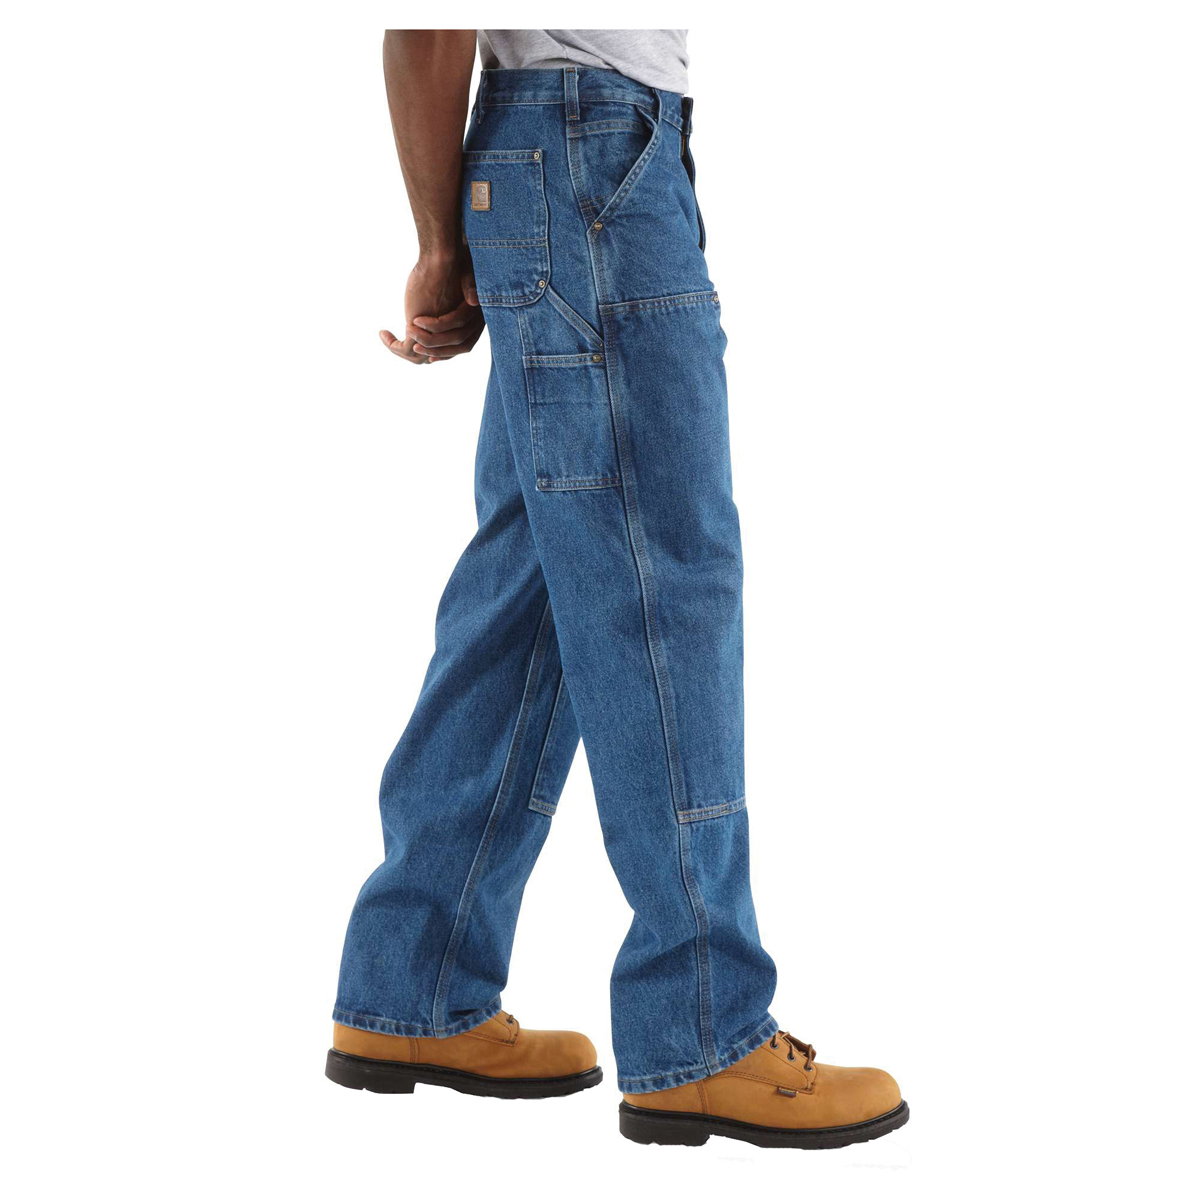 Carhartt B73-DST-34X34 Utility Logger Jeans, 34 in Waist, 34 in L Inseam, Darkstone, Loose Fit - 7